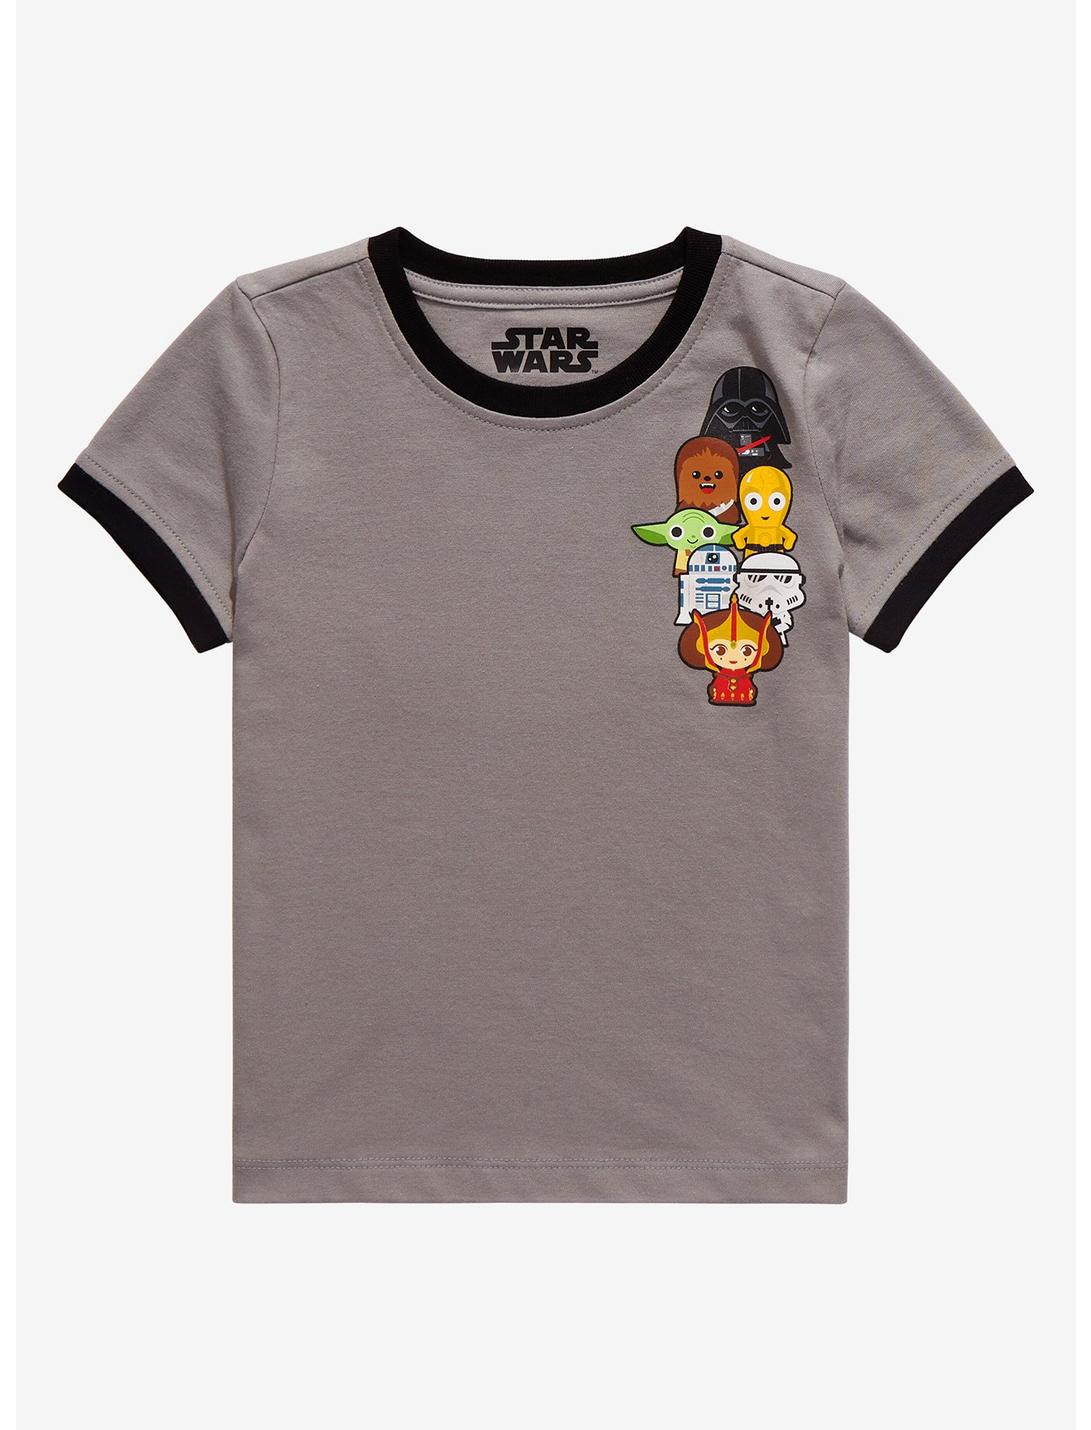 Star Wars Chibi Characters Group Portrait Toddler Ringer T-Shirt , GREY, hi-res